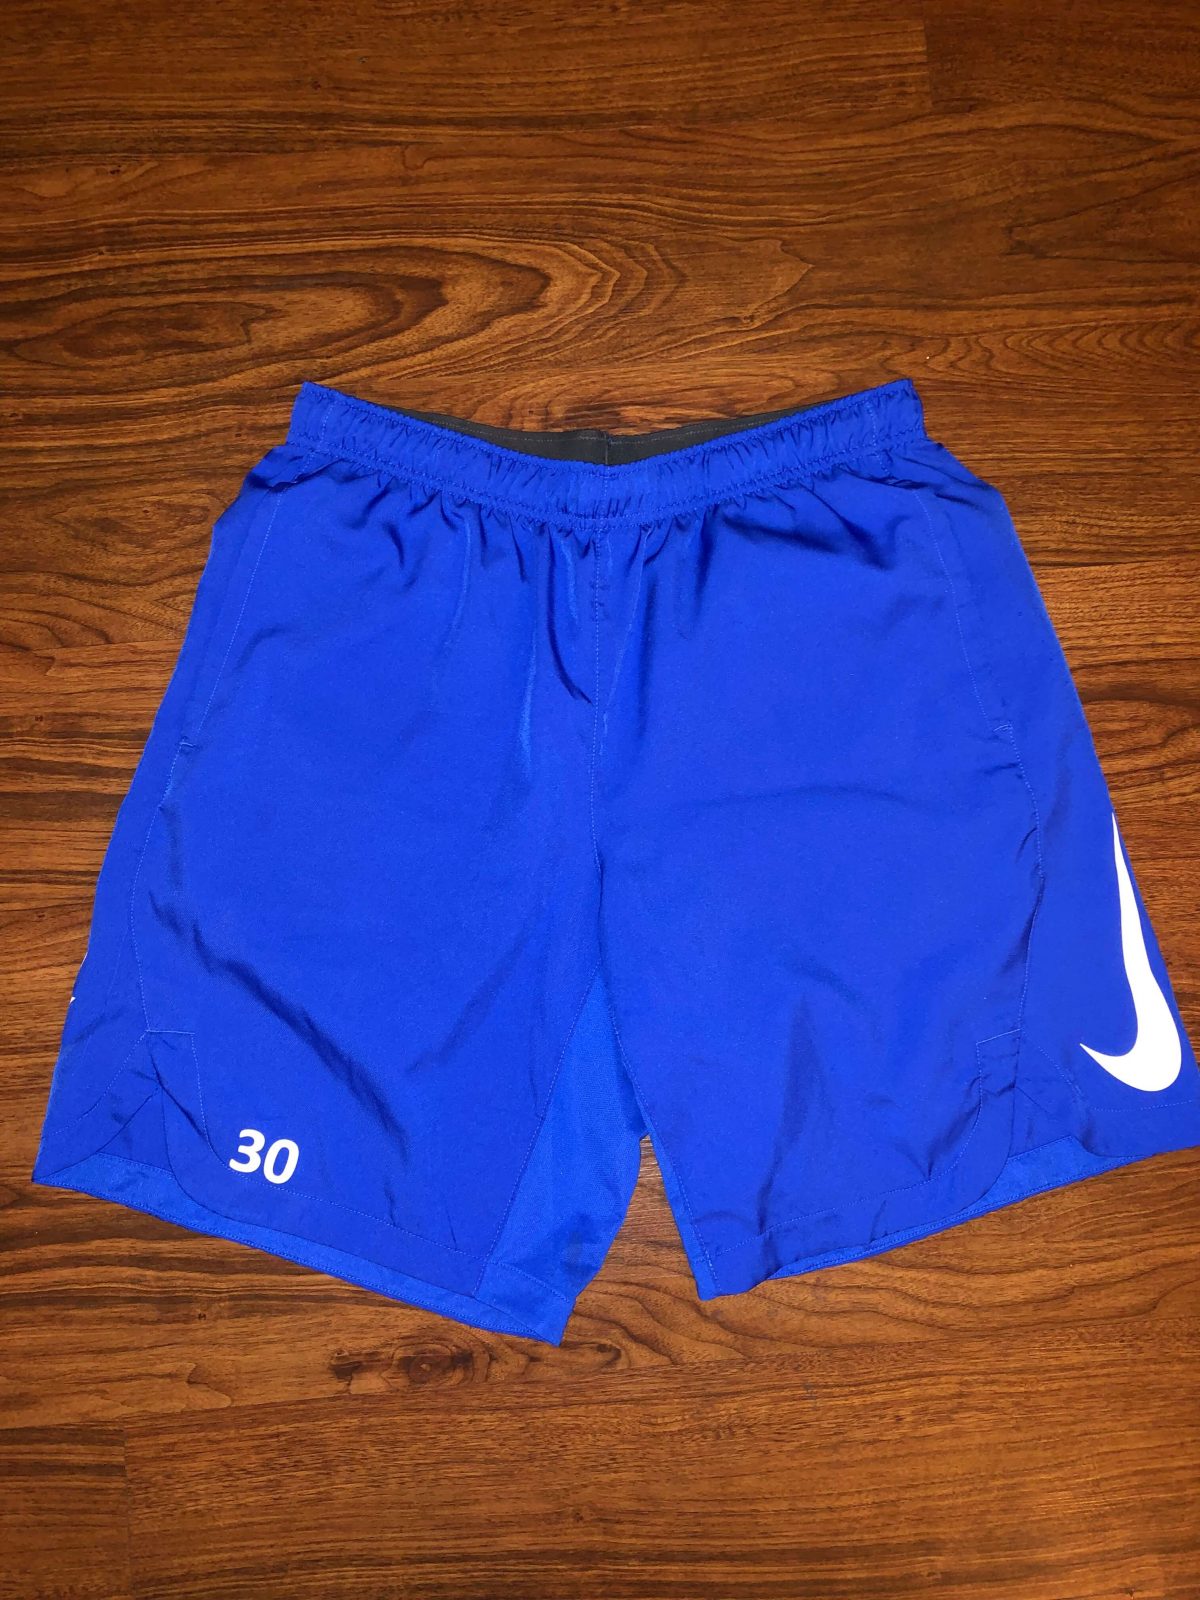 Jaren Shelby Kentucky Baseball Nike Dri-Fit Shorts : NARP Clothing